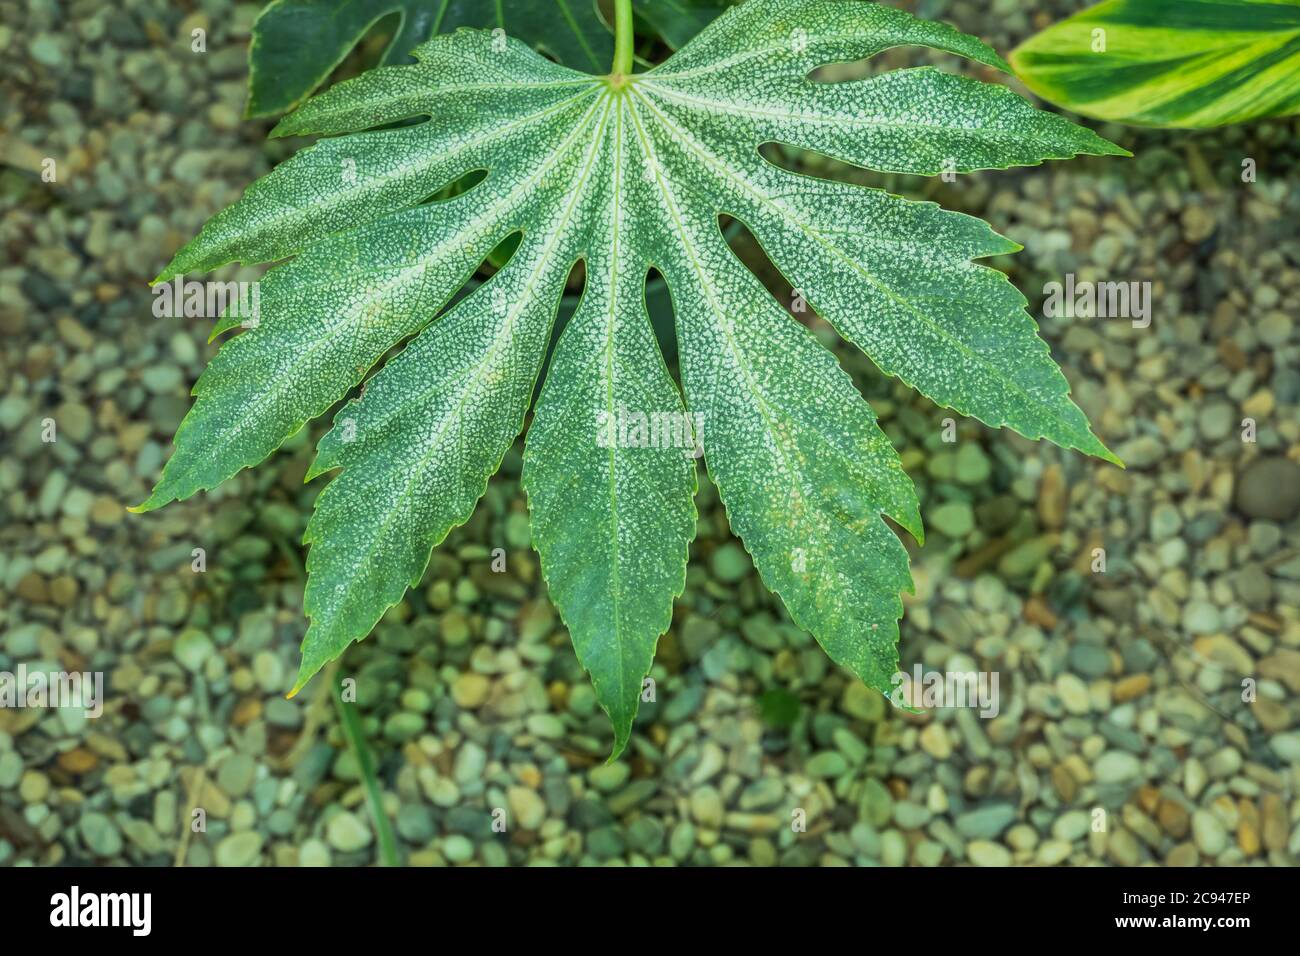 detail view of a plant leaf fatsia japonica variegata japanese aralia Stock Photo